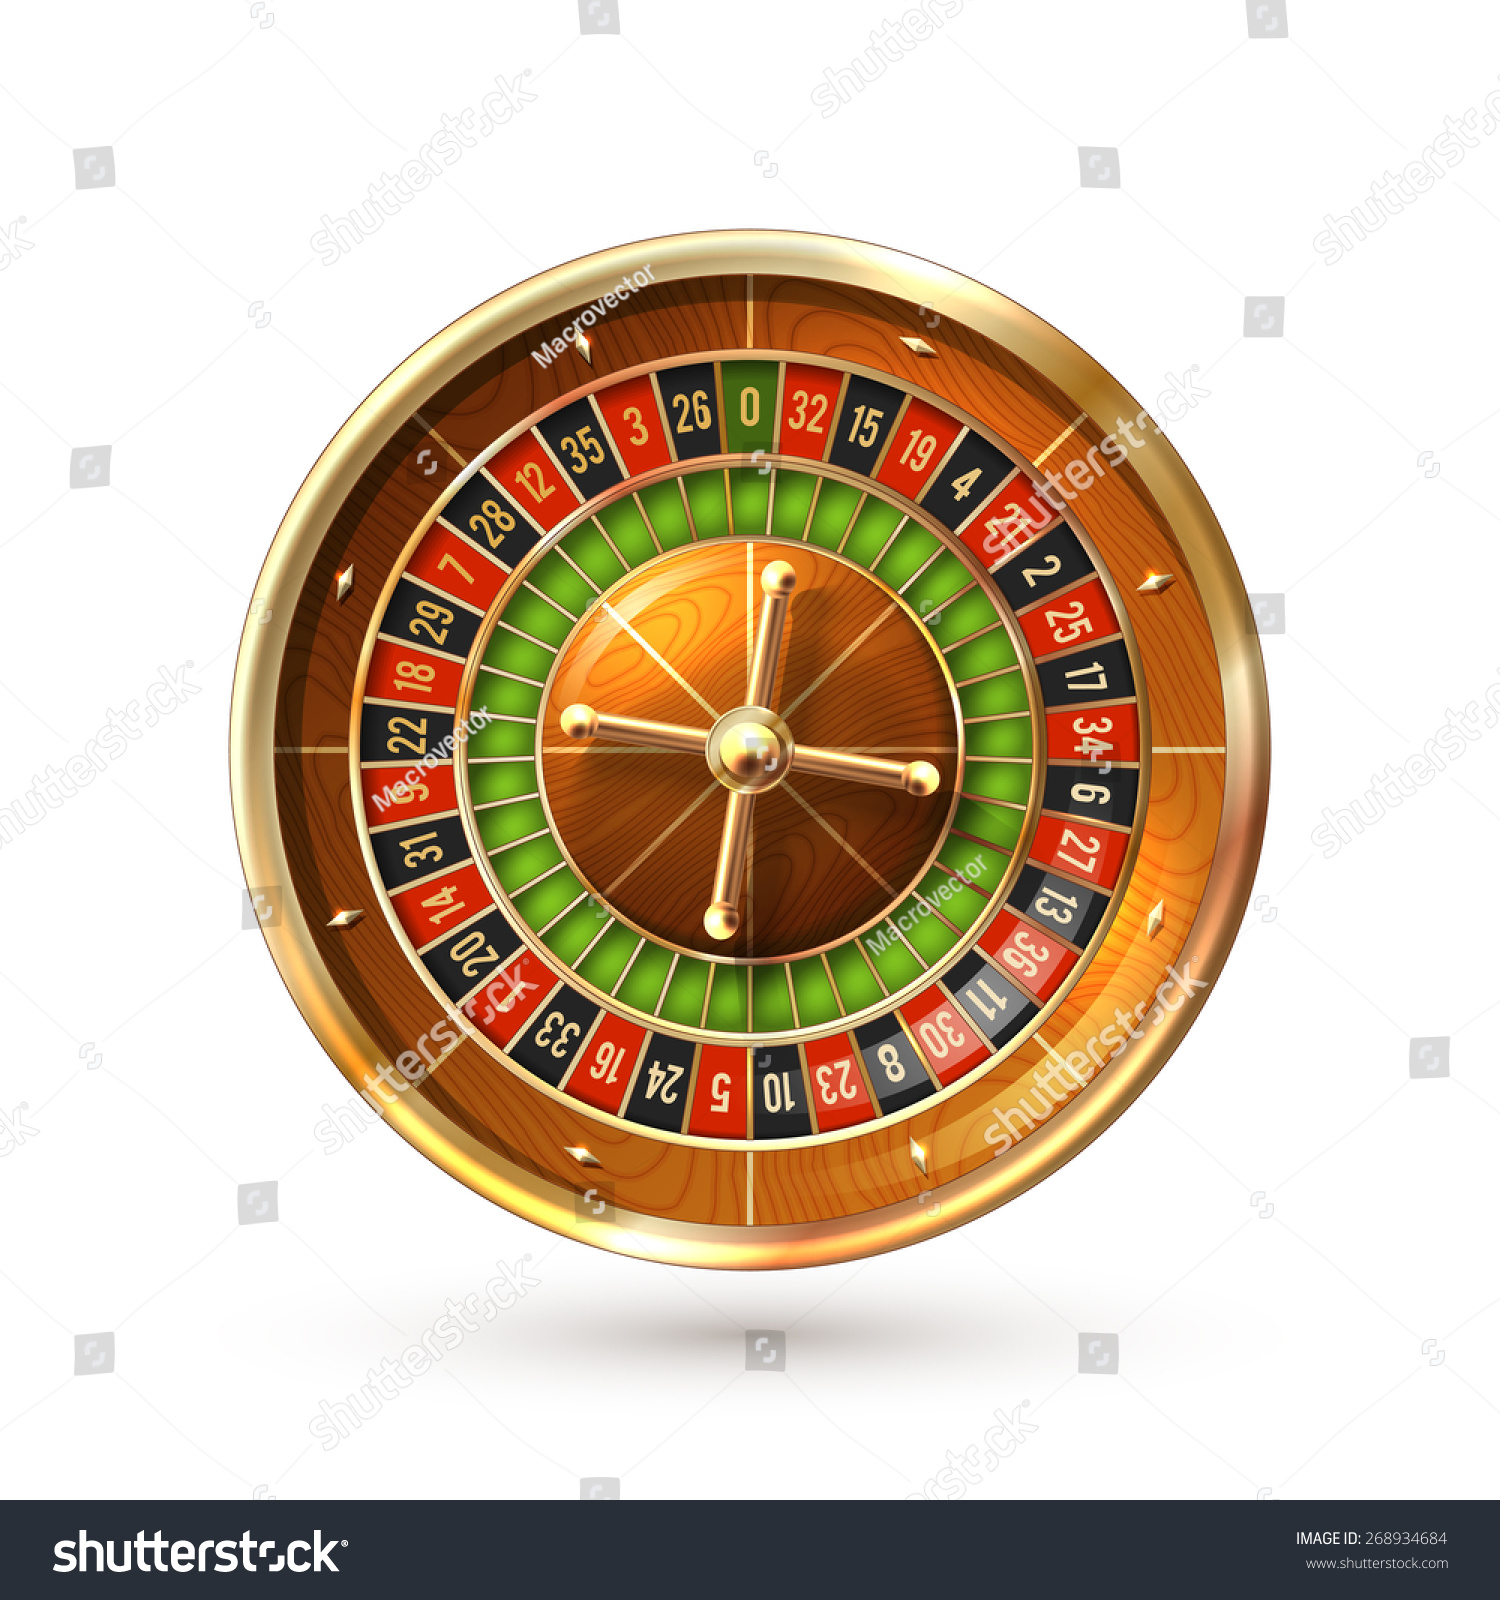 Realistic Casino Gambling Roulette Wheel Isolated Stock Vector 268934684 - Shutterstock